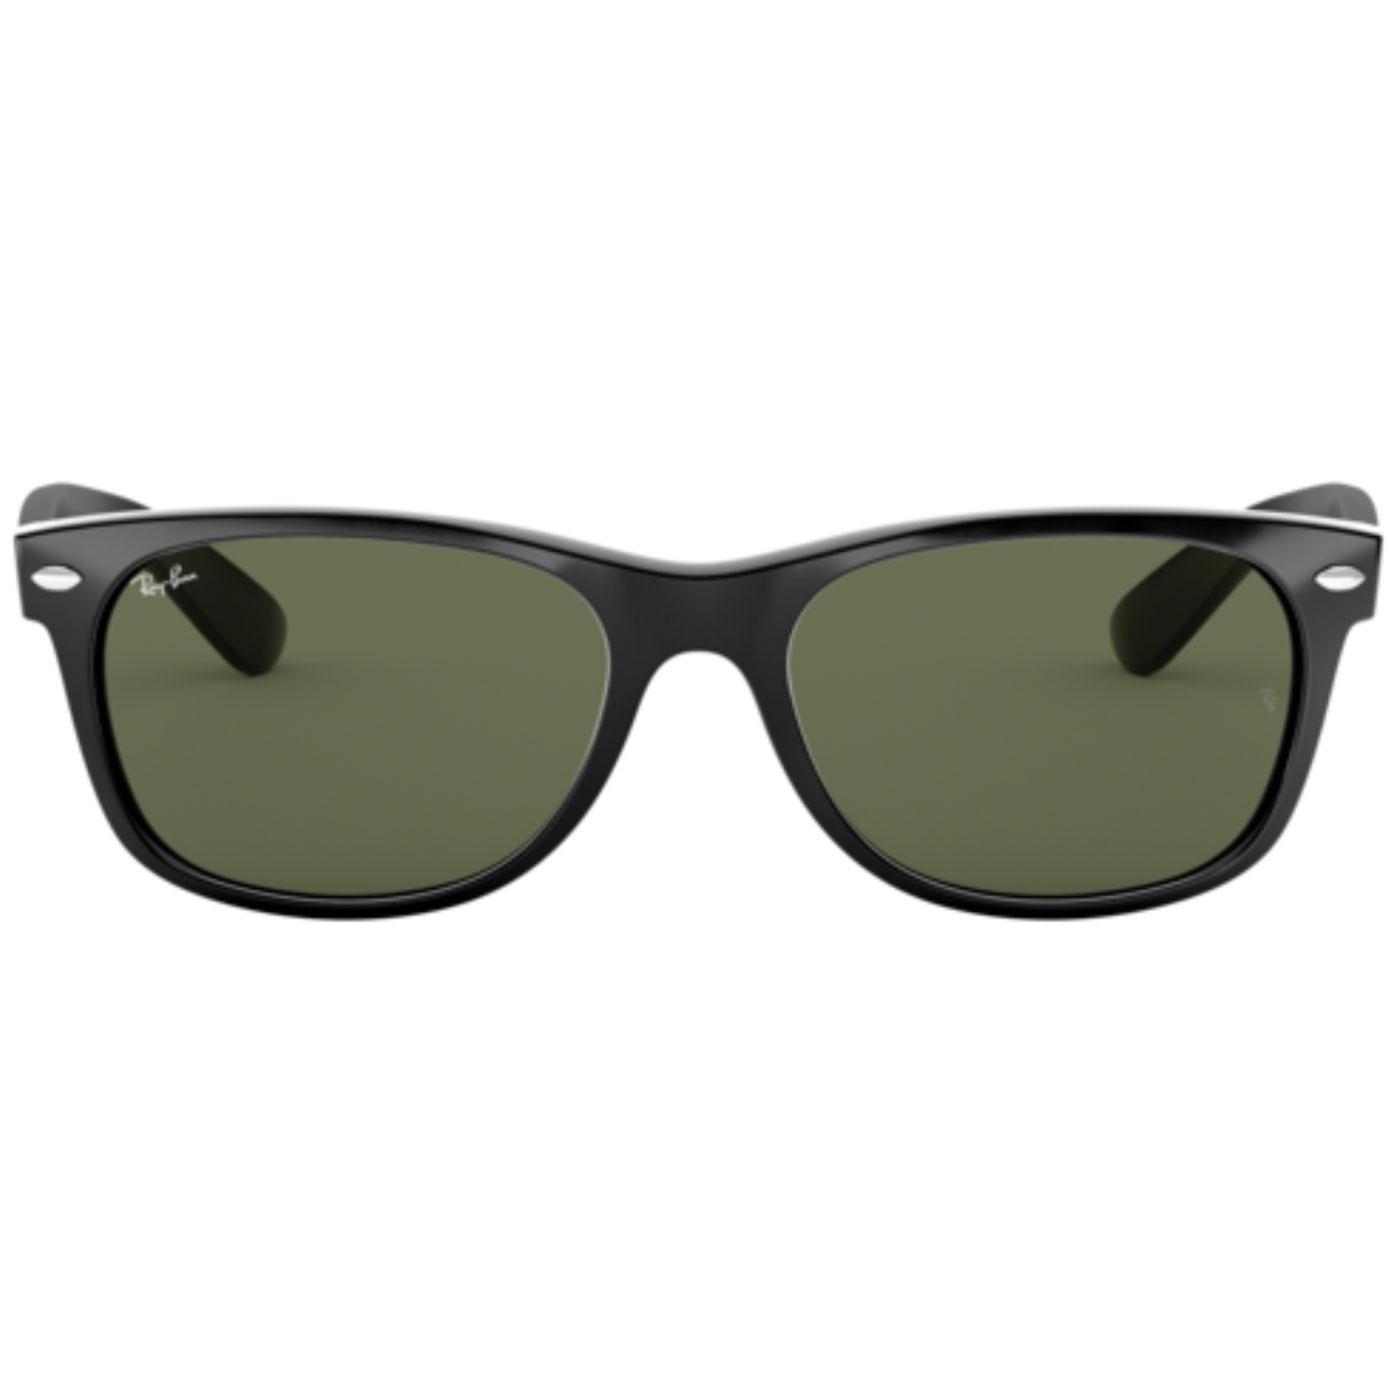 New Wayfarer Ray-Ban Retro Sunglasses in Black